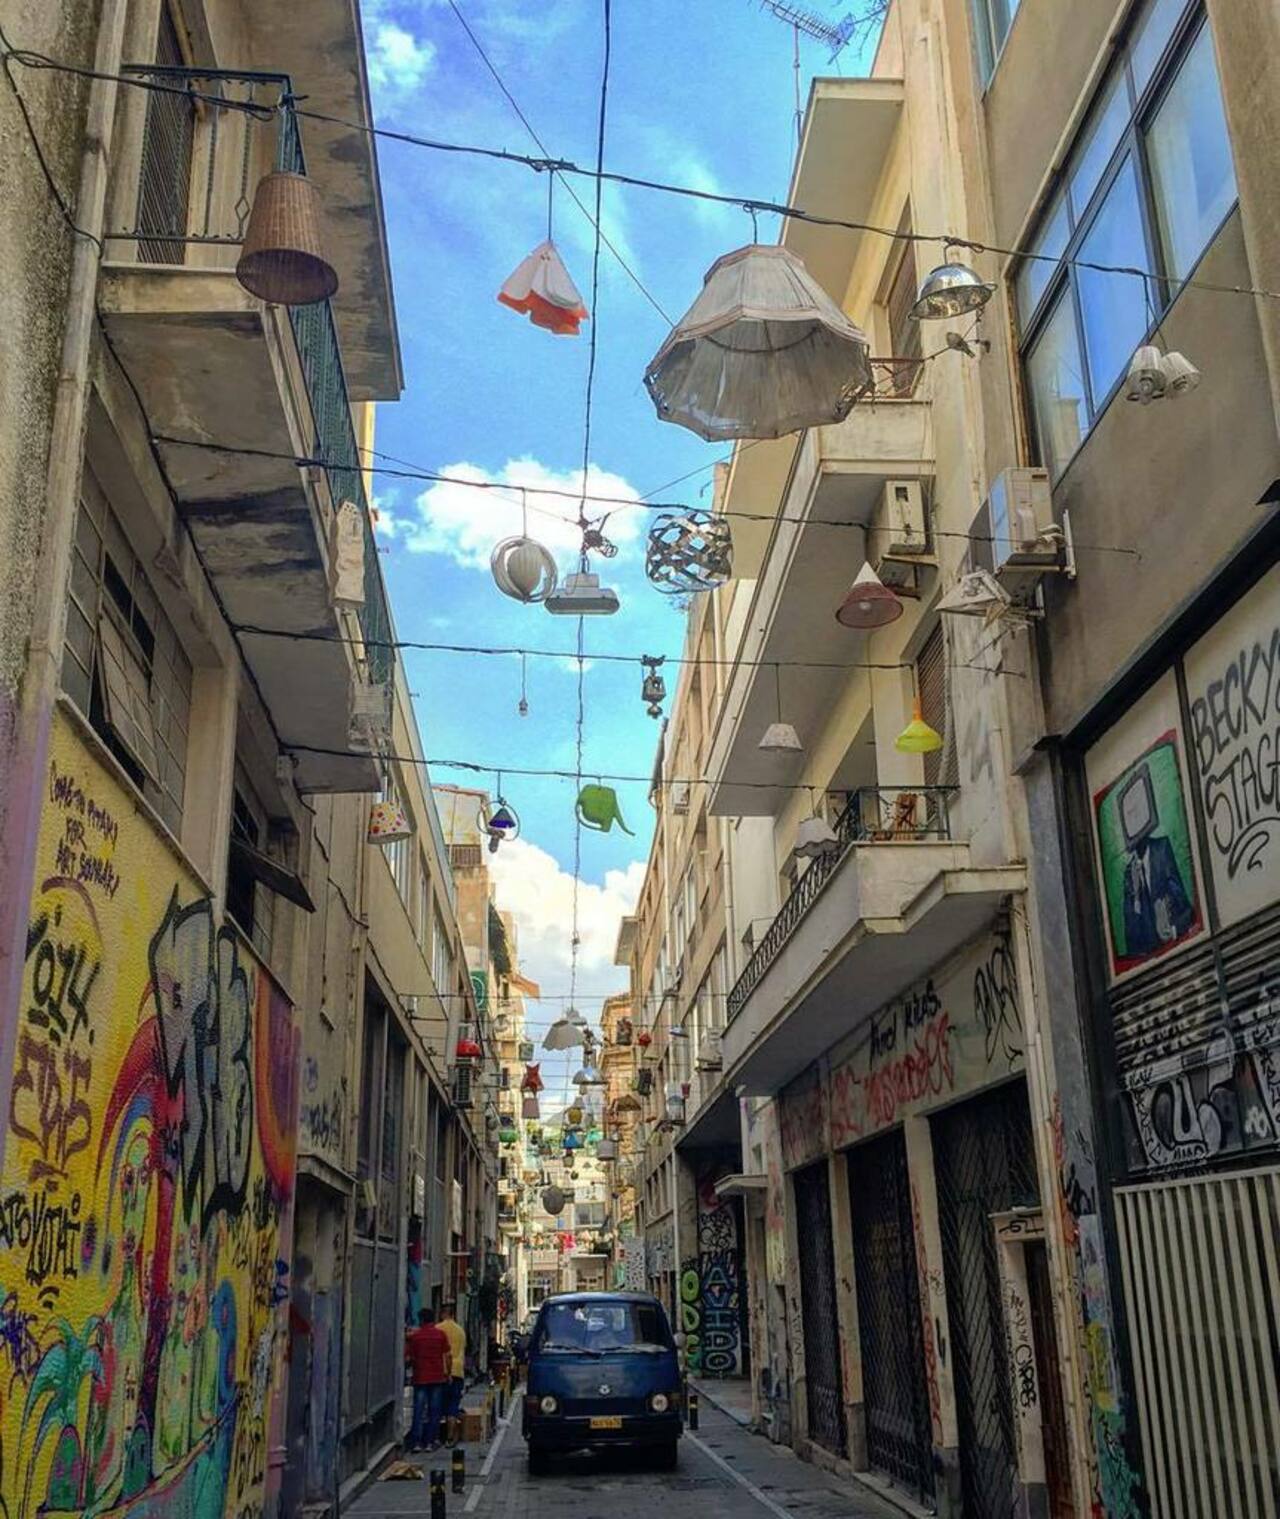 RT http://twitter.com/AthensInsta/status/650487489455632385 #athens #greece #street #lamps #graffiti #streetart #explore #crazy #travel #wonder #s… http://t.co/QR5Regcmv1